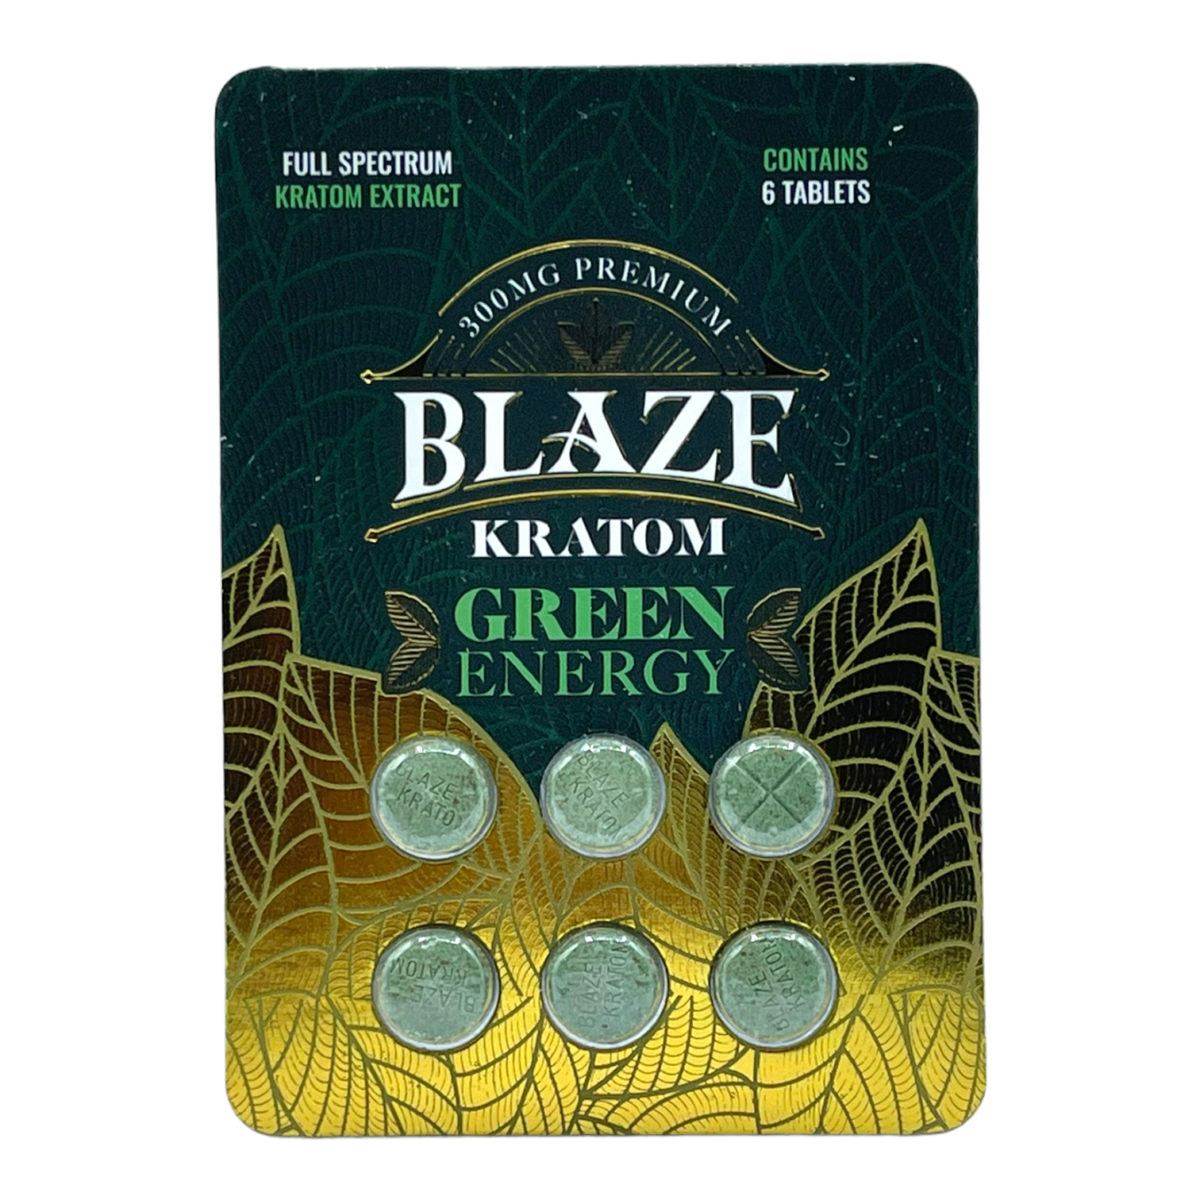 Blaze Green Energy Kratom Extract Tablets – 6 count